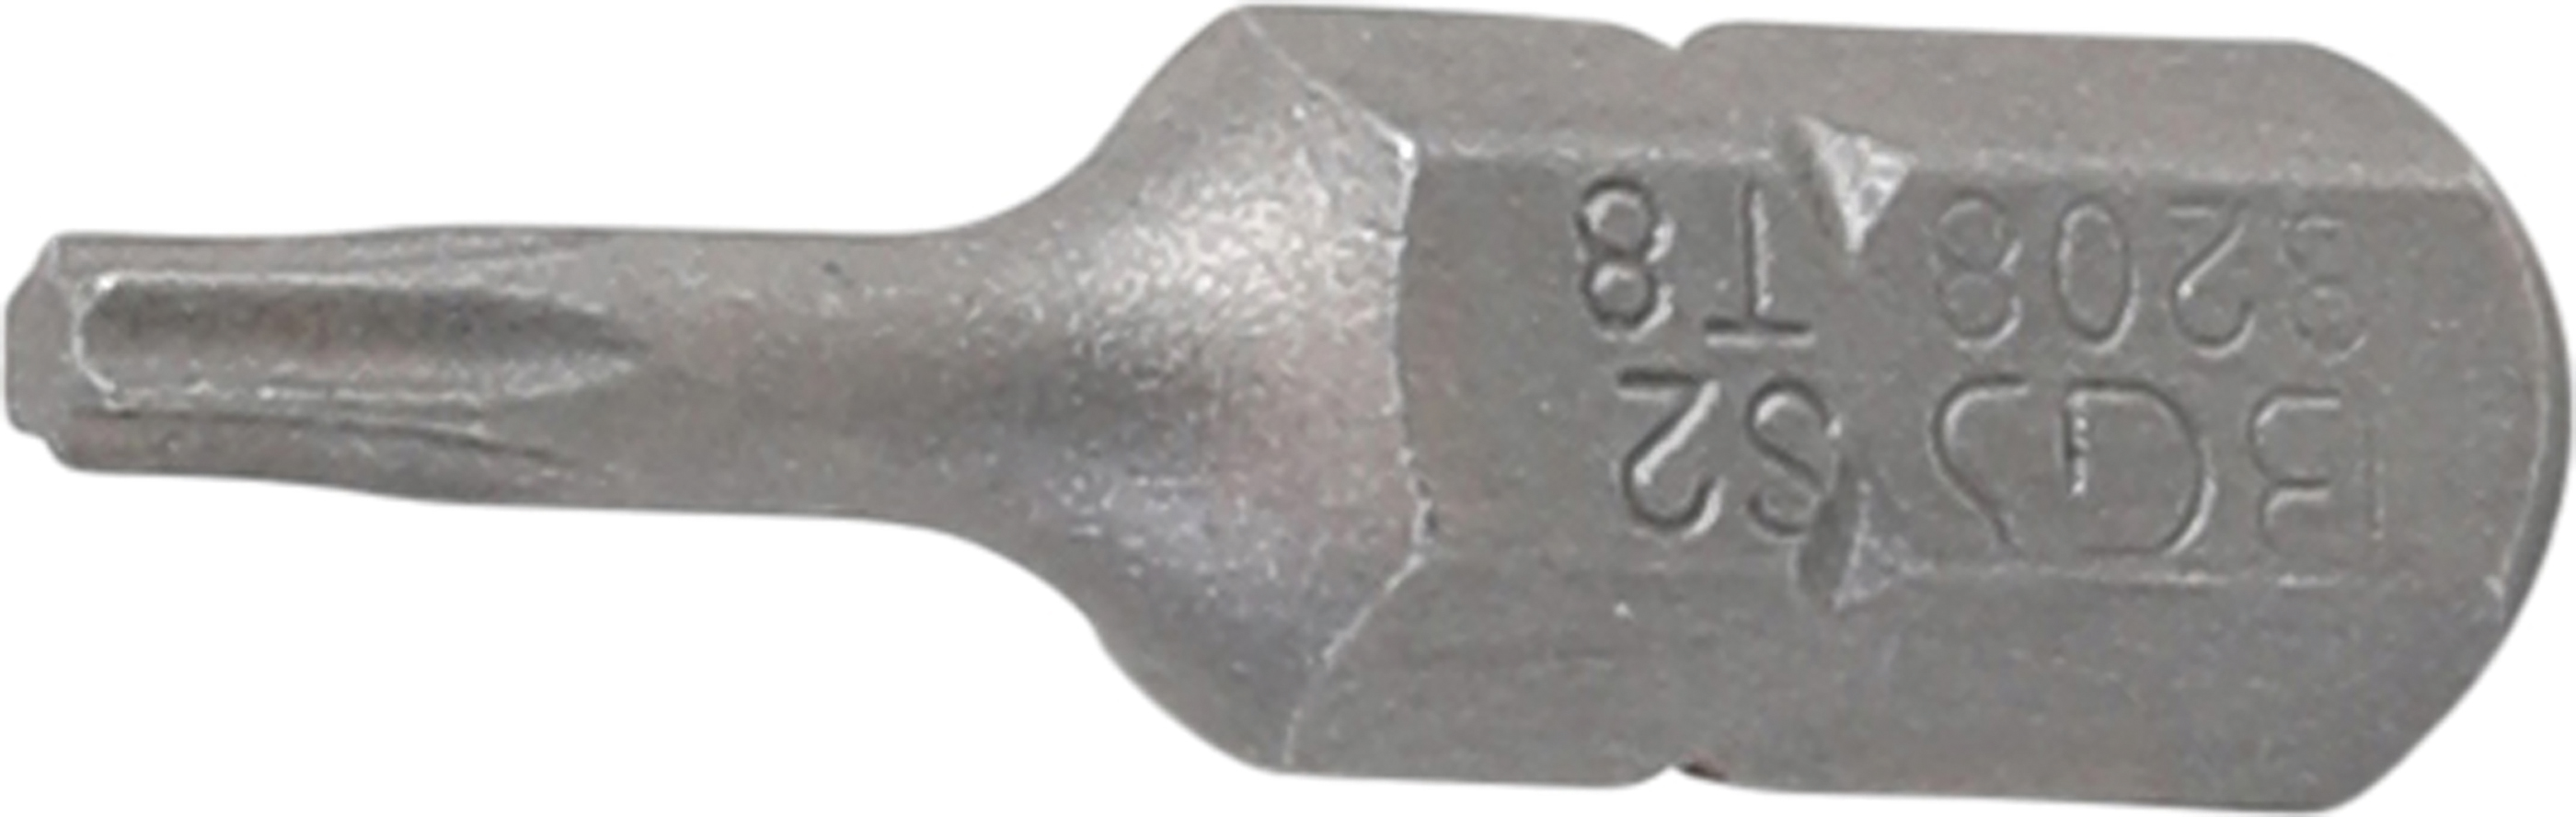 BGS Bit | Länge 25 mm | Antrieb Außensechskant 6,3 mm (1/4") | T-Profil (für Torx) T8